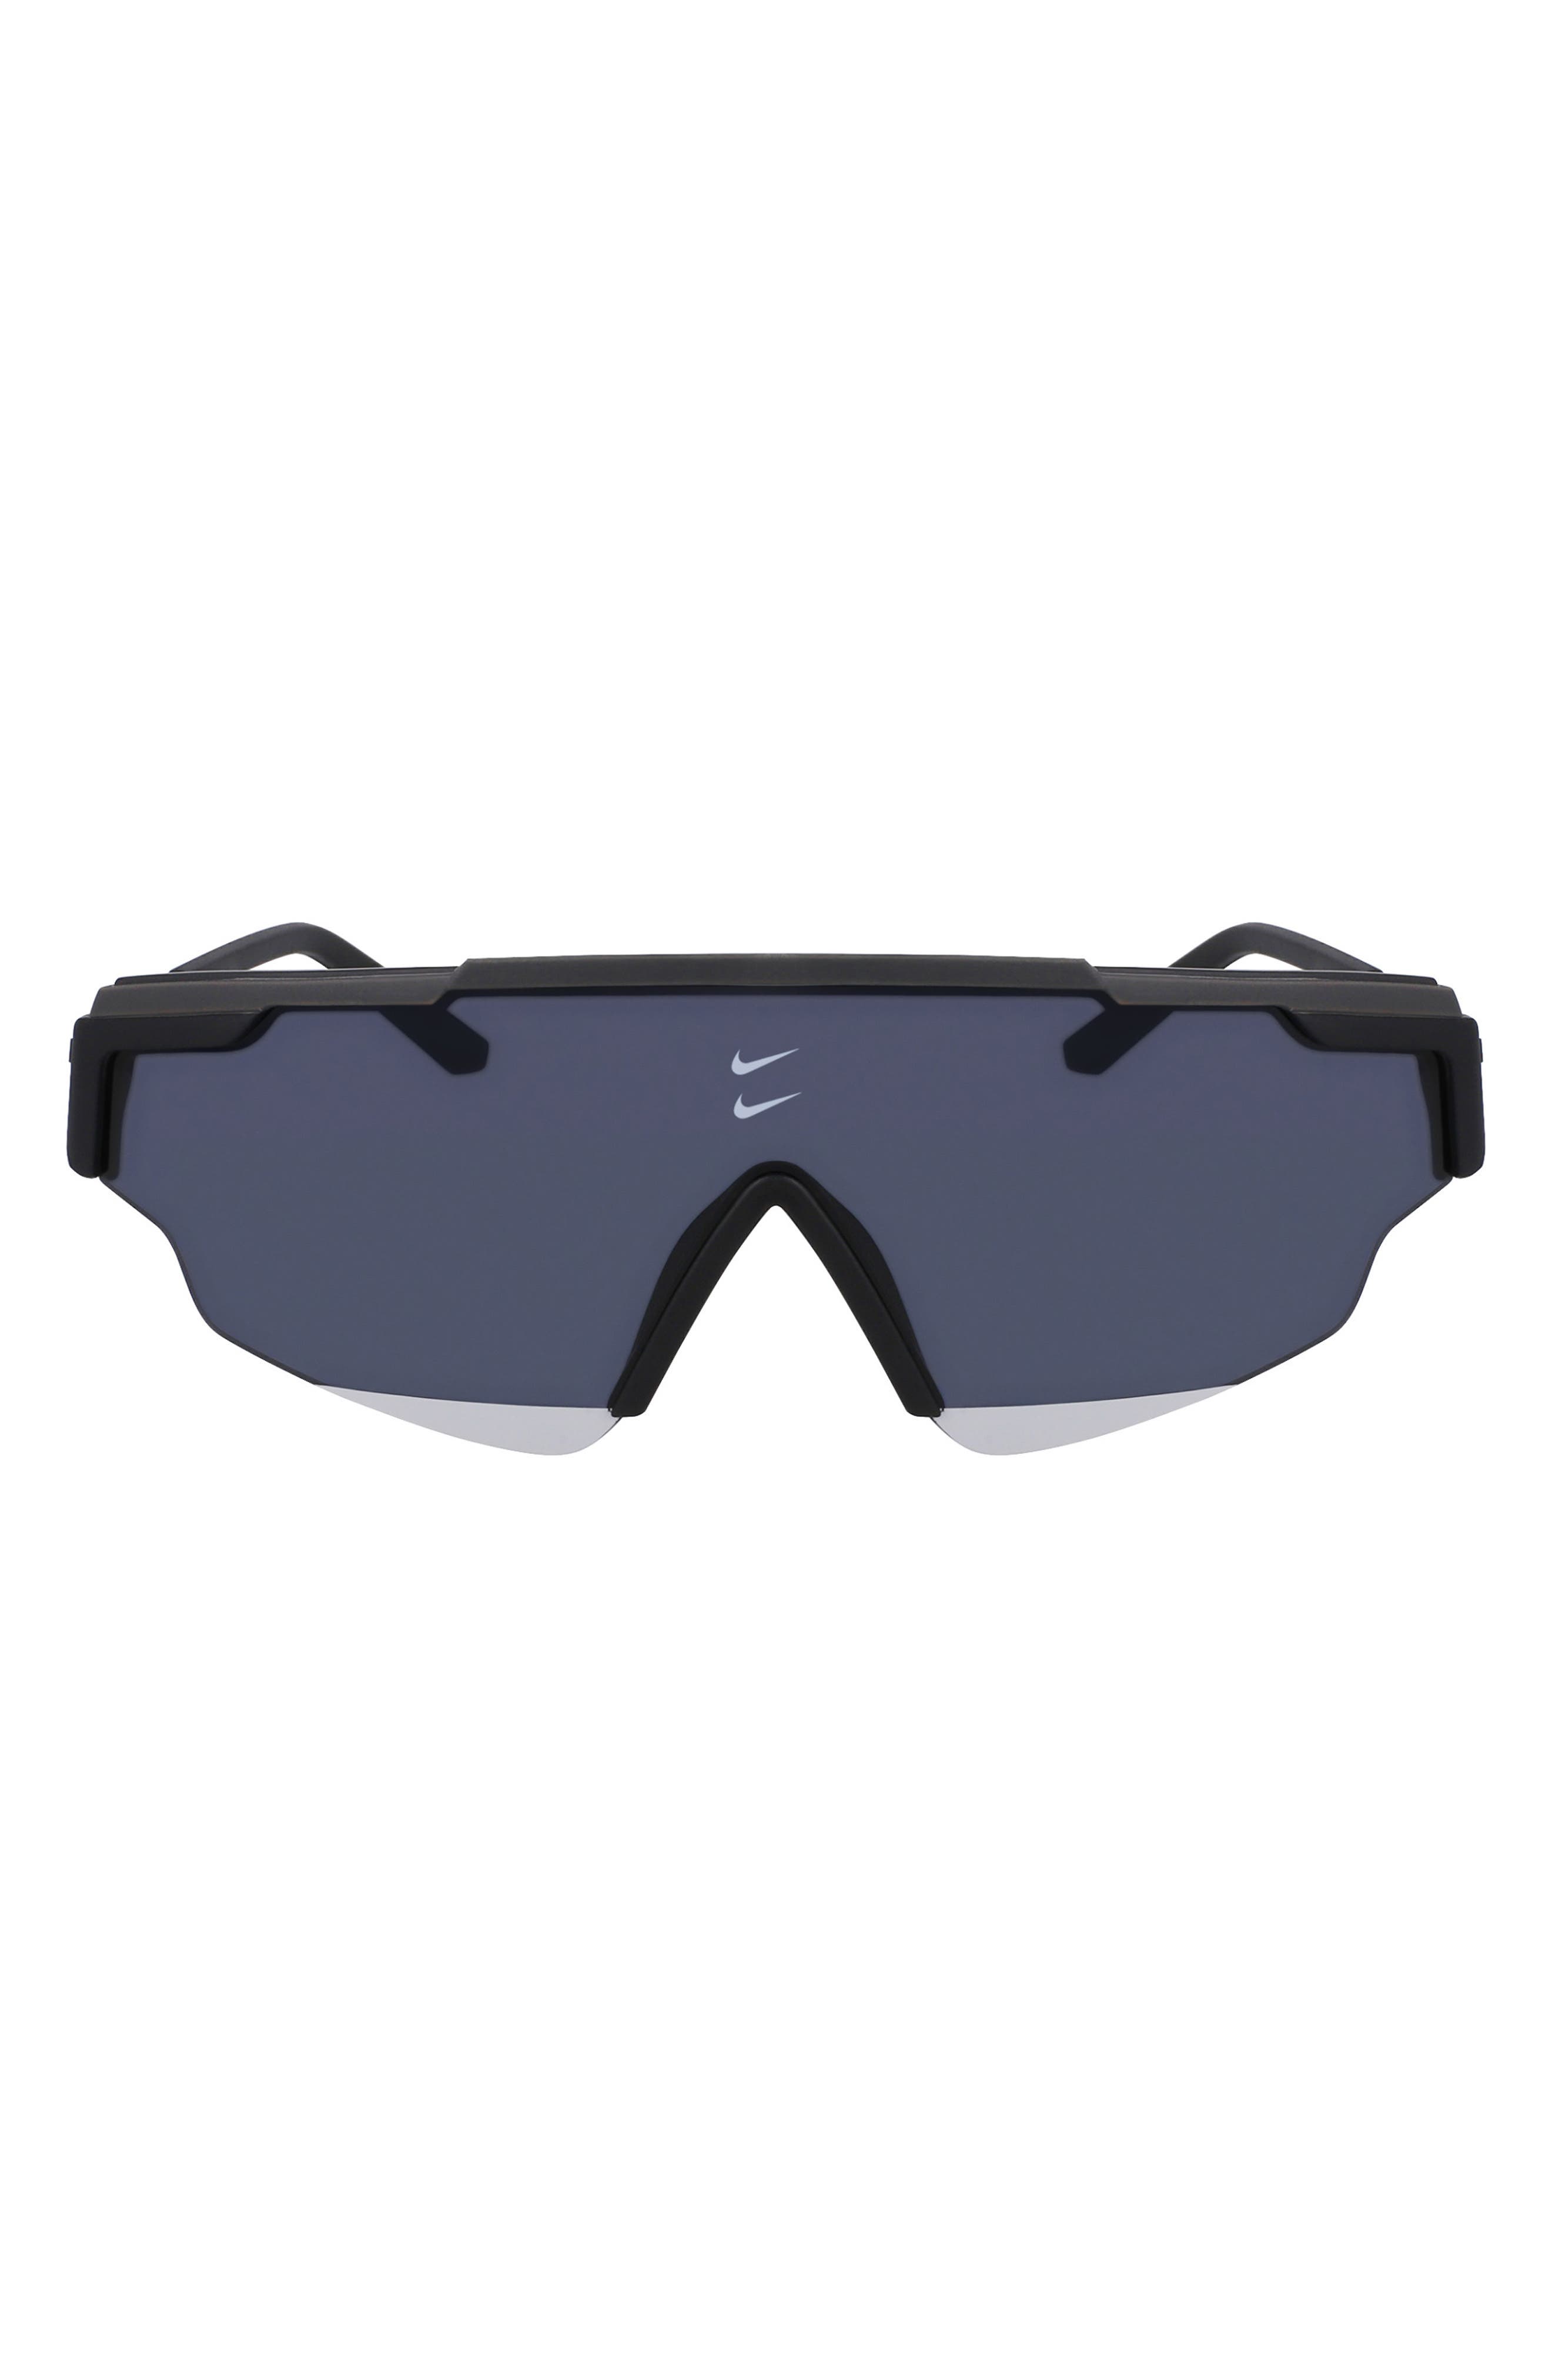 Nike Marquee Edge 64mm Shield Sunglasses in Mineral Teal/Orange